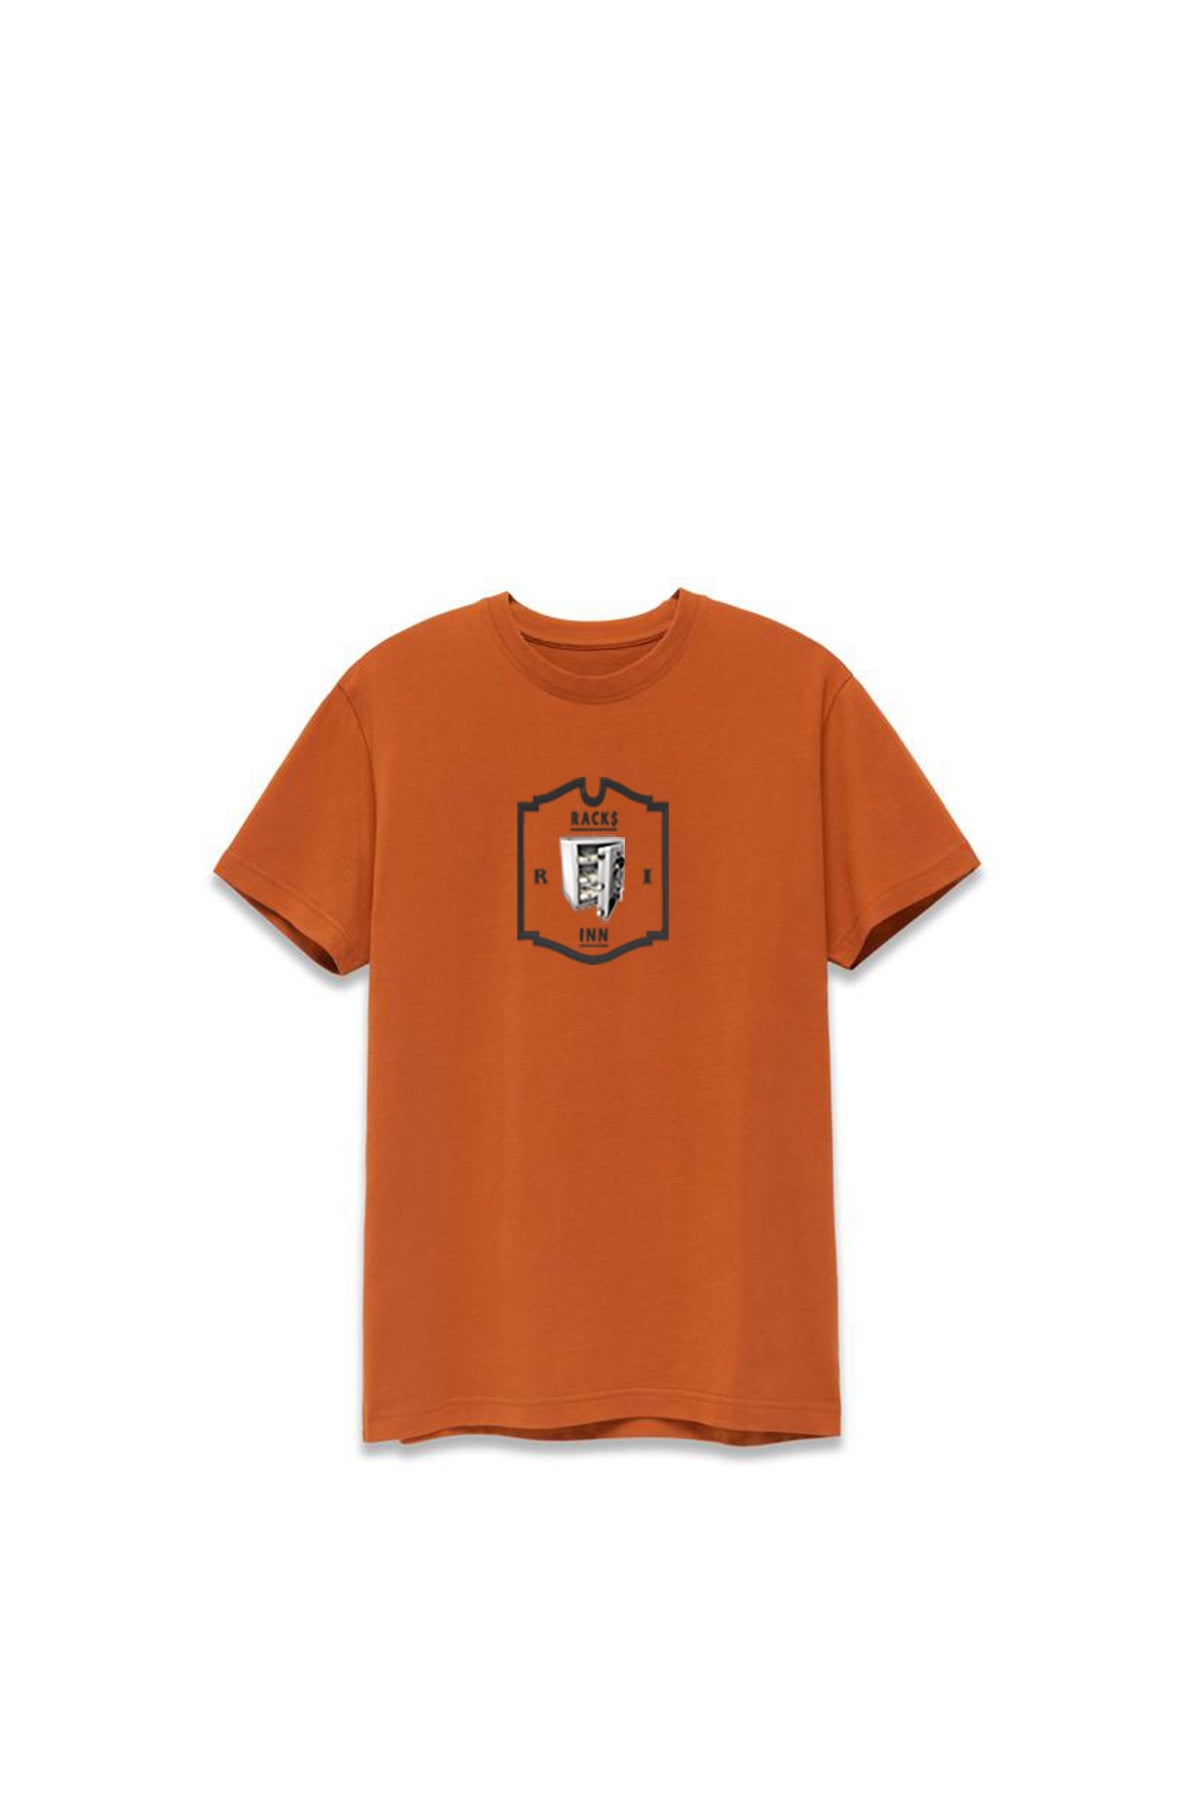 Money Vault T-Shirt - Dust Orange